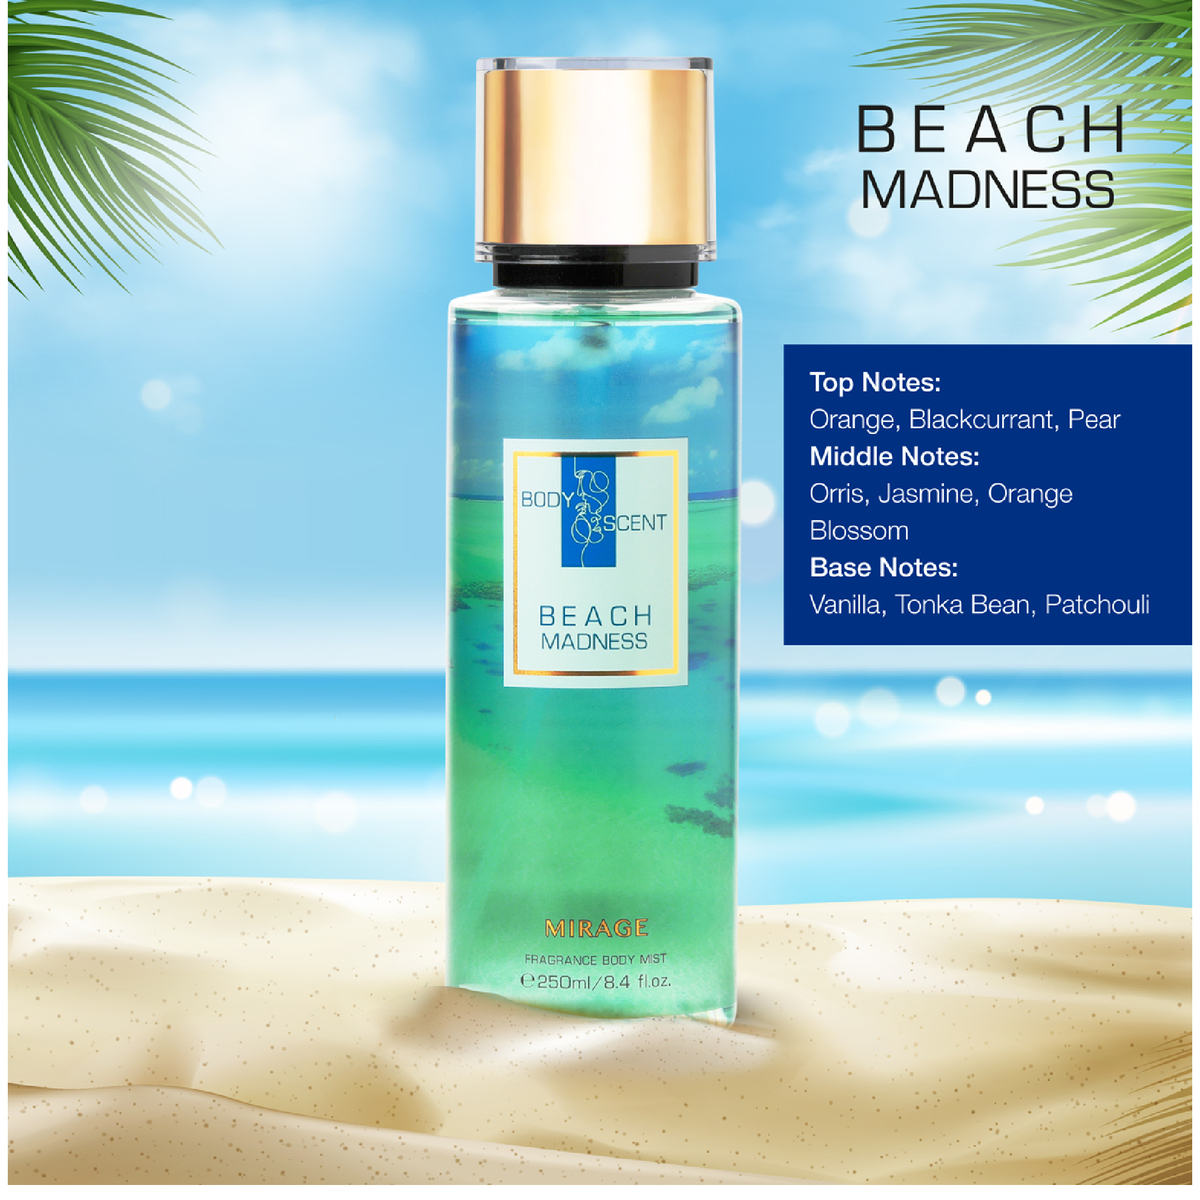 Body Scent Mirage Fragrance Body Mist for Women, Beach Madness, 250 ml